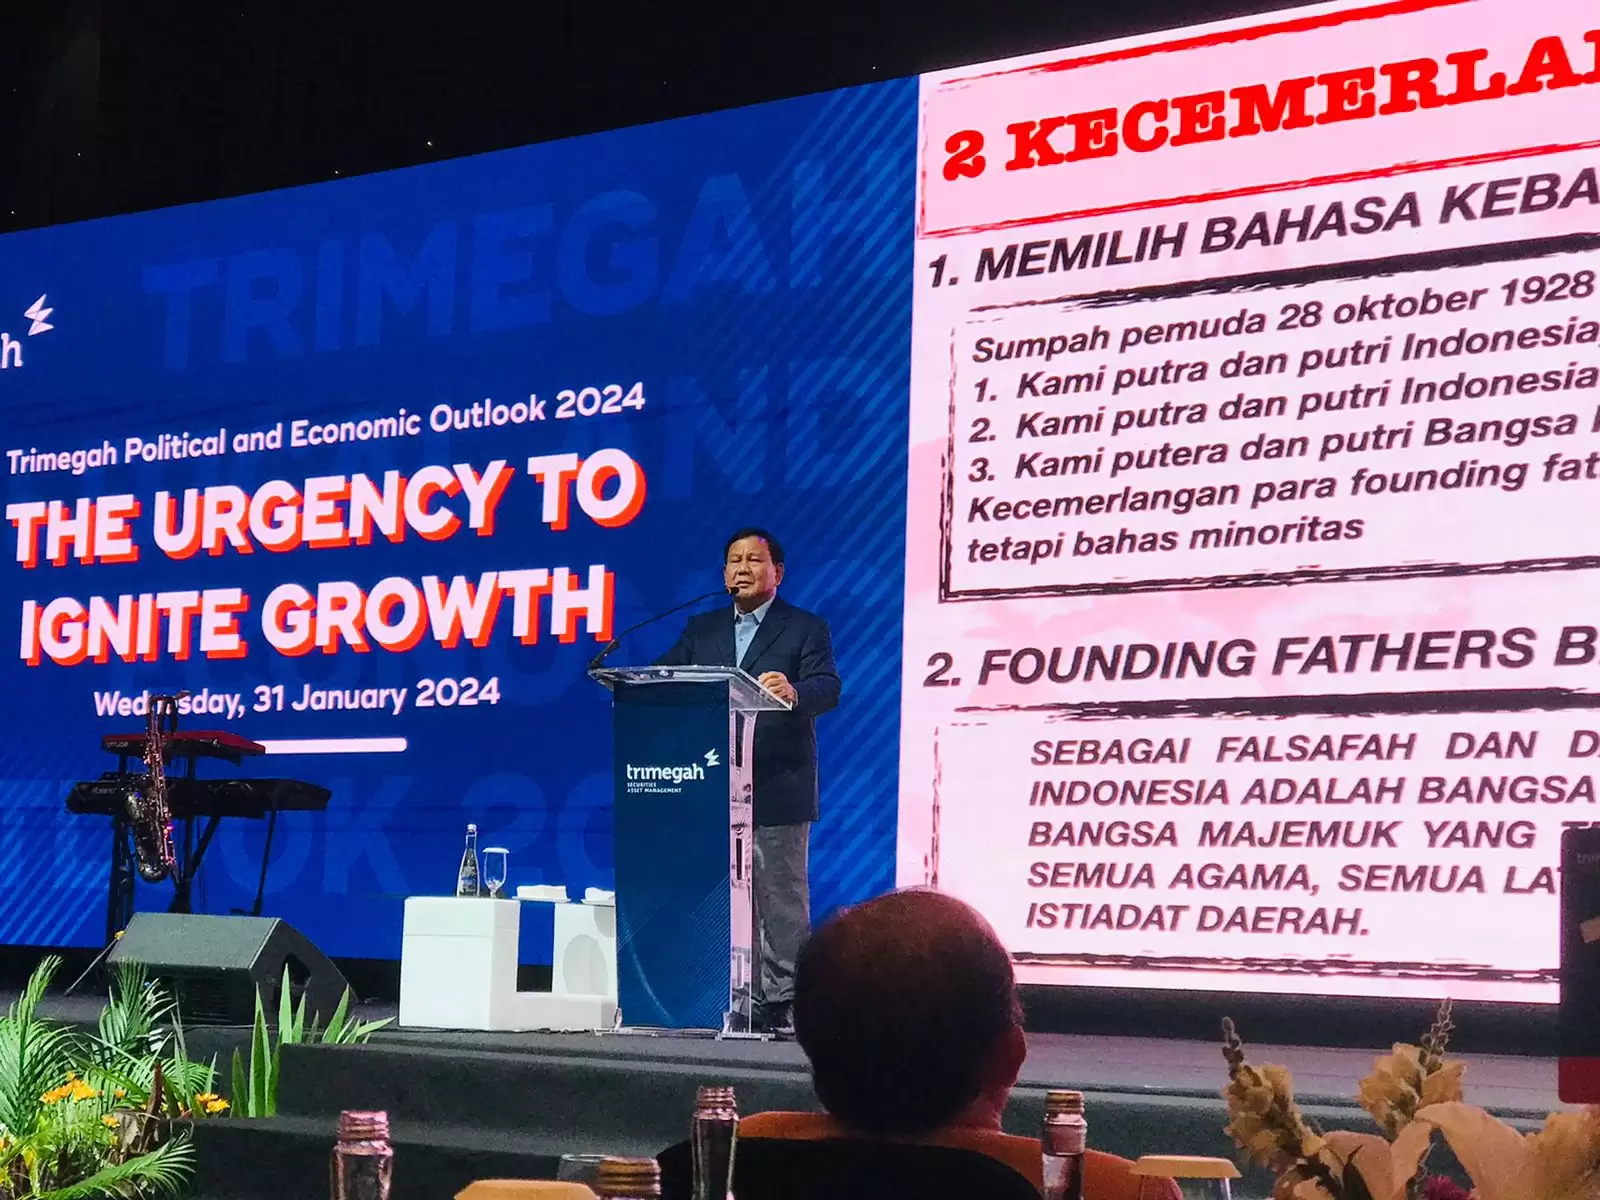 Ilustrasi - Trimegah Political and Economics Outlook 2024 The Urgency to Ignite Growth, Prabwowo keynote speaker. (Foto: MI/Zefry)